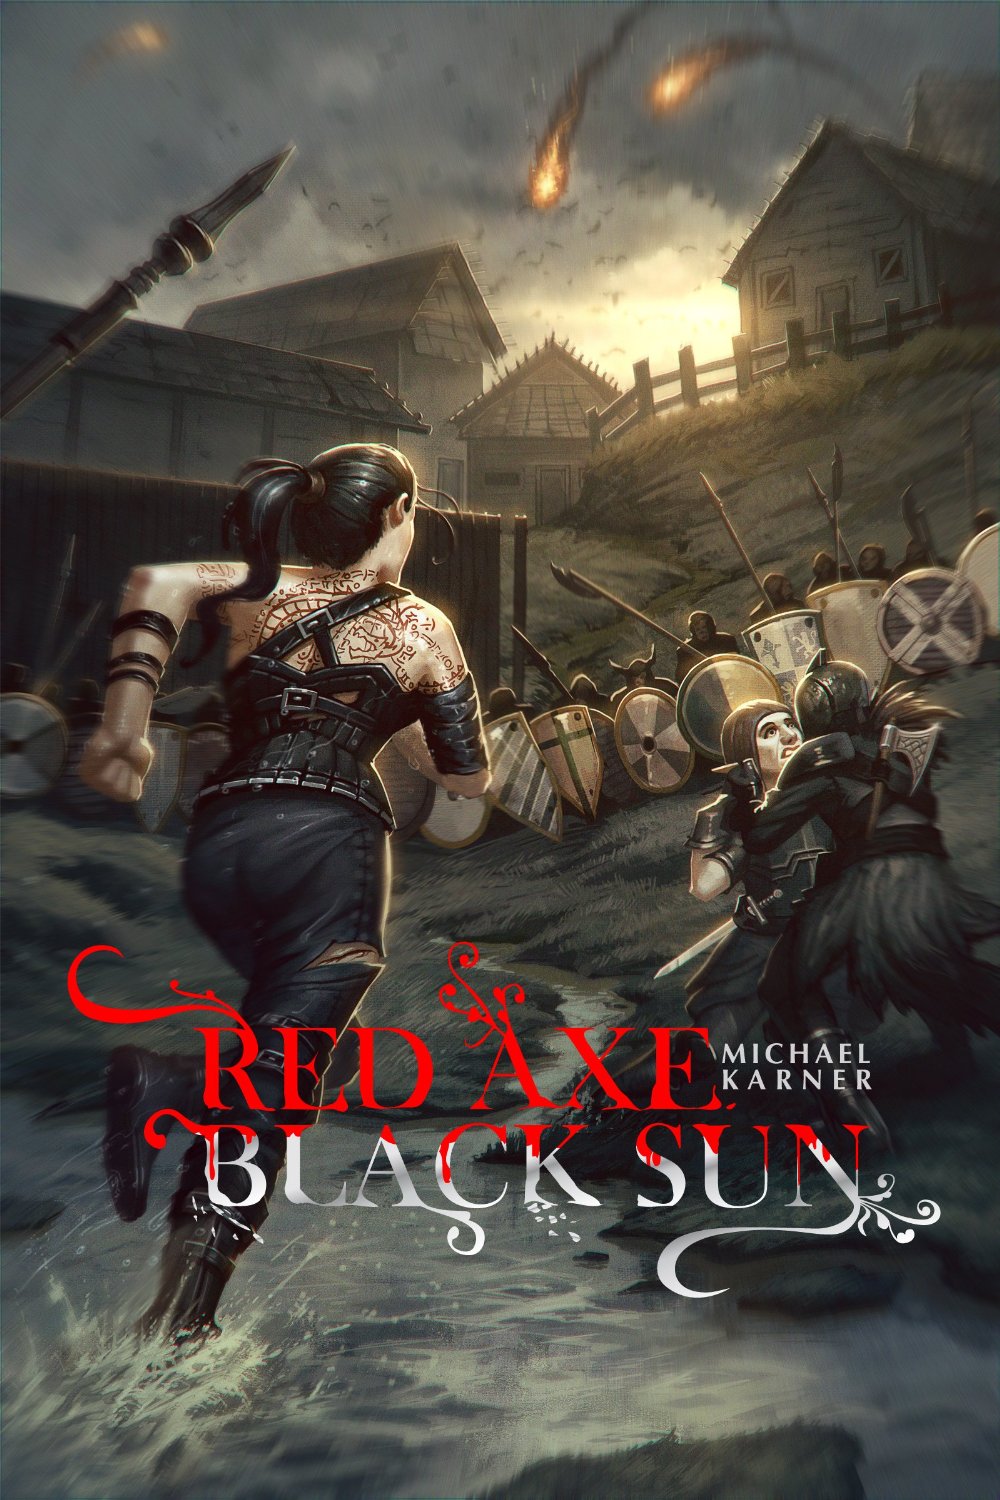 Red Axe, Black Sun by Michael Karner